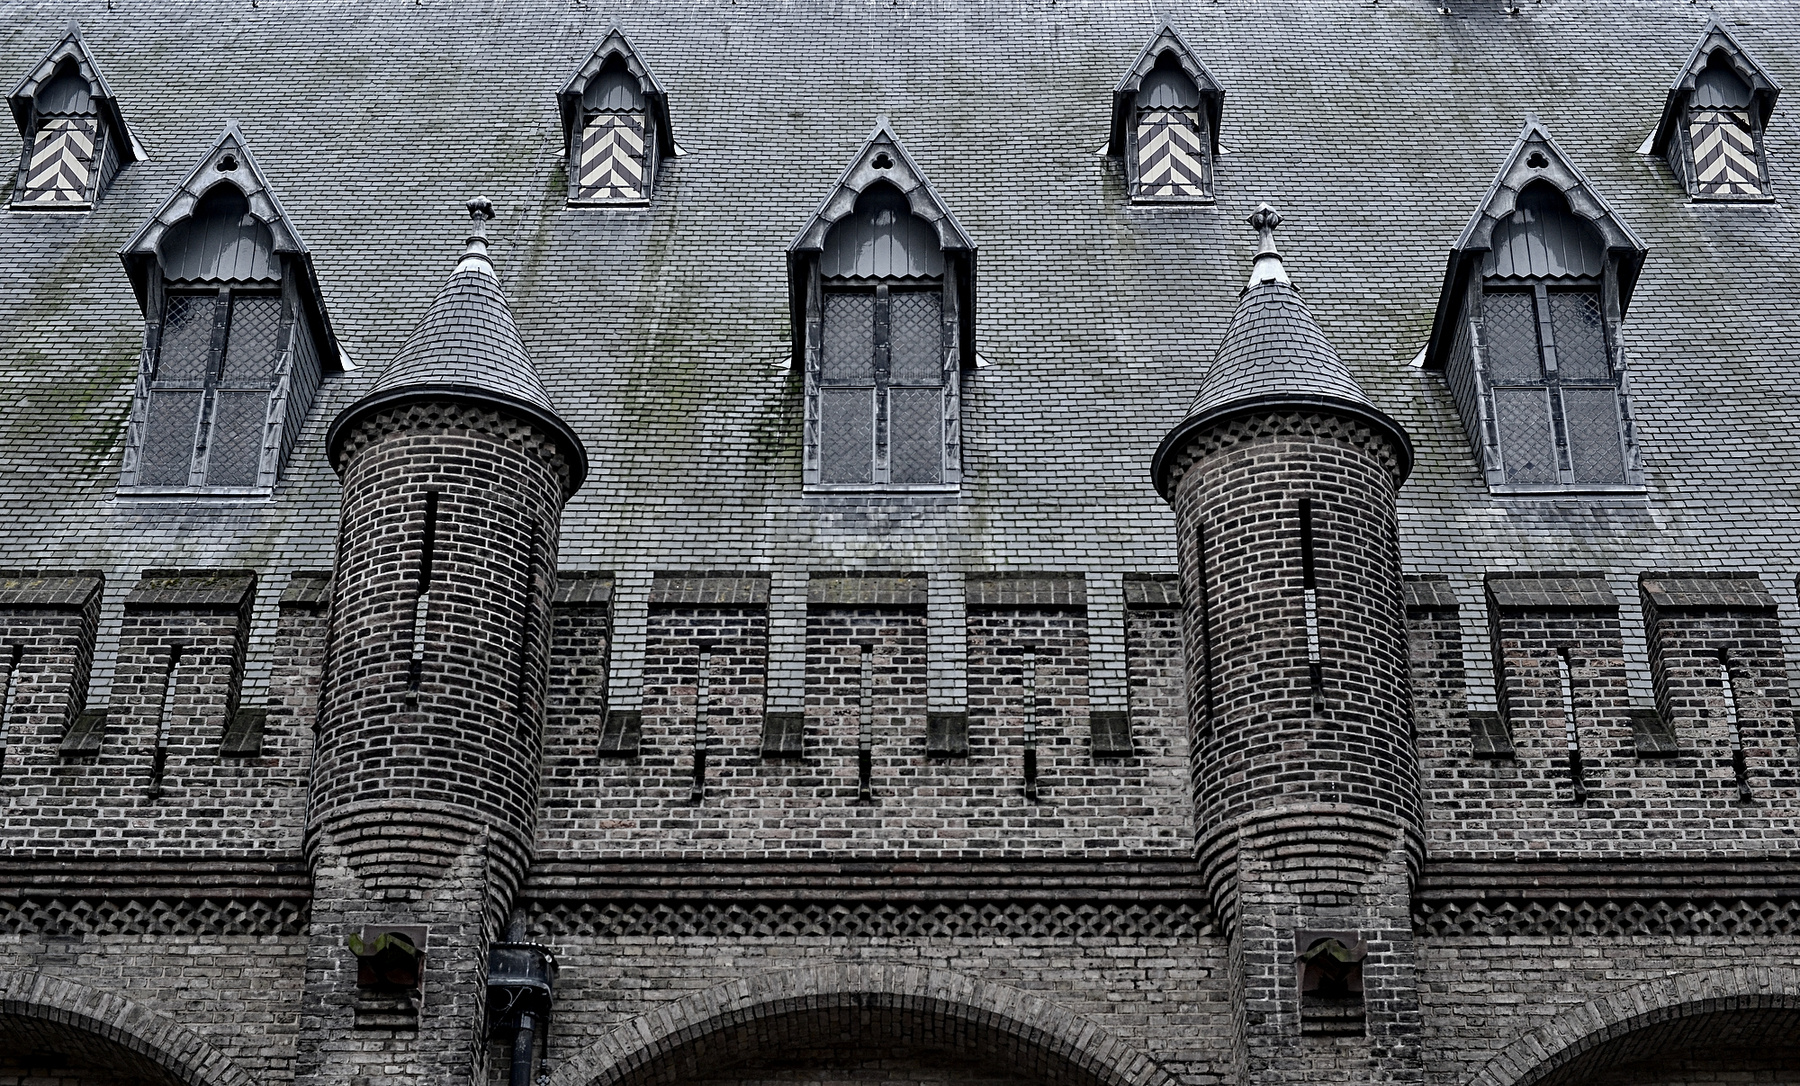 [ пешка башенка король ] стена кирпич кладка хвосты башни башенки окно черепица замок крыша фрагмент